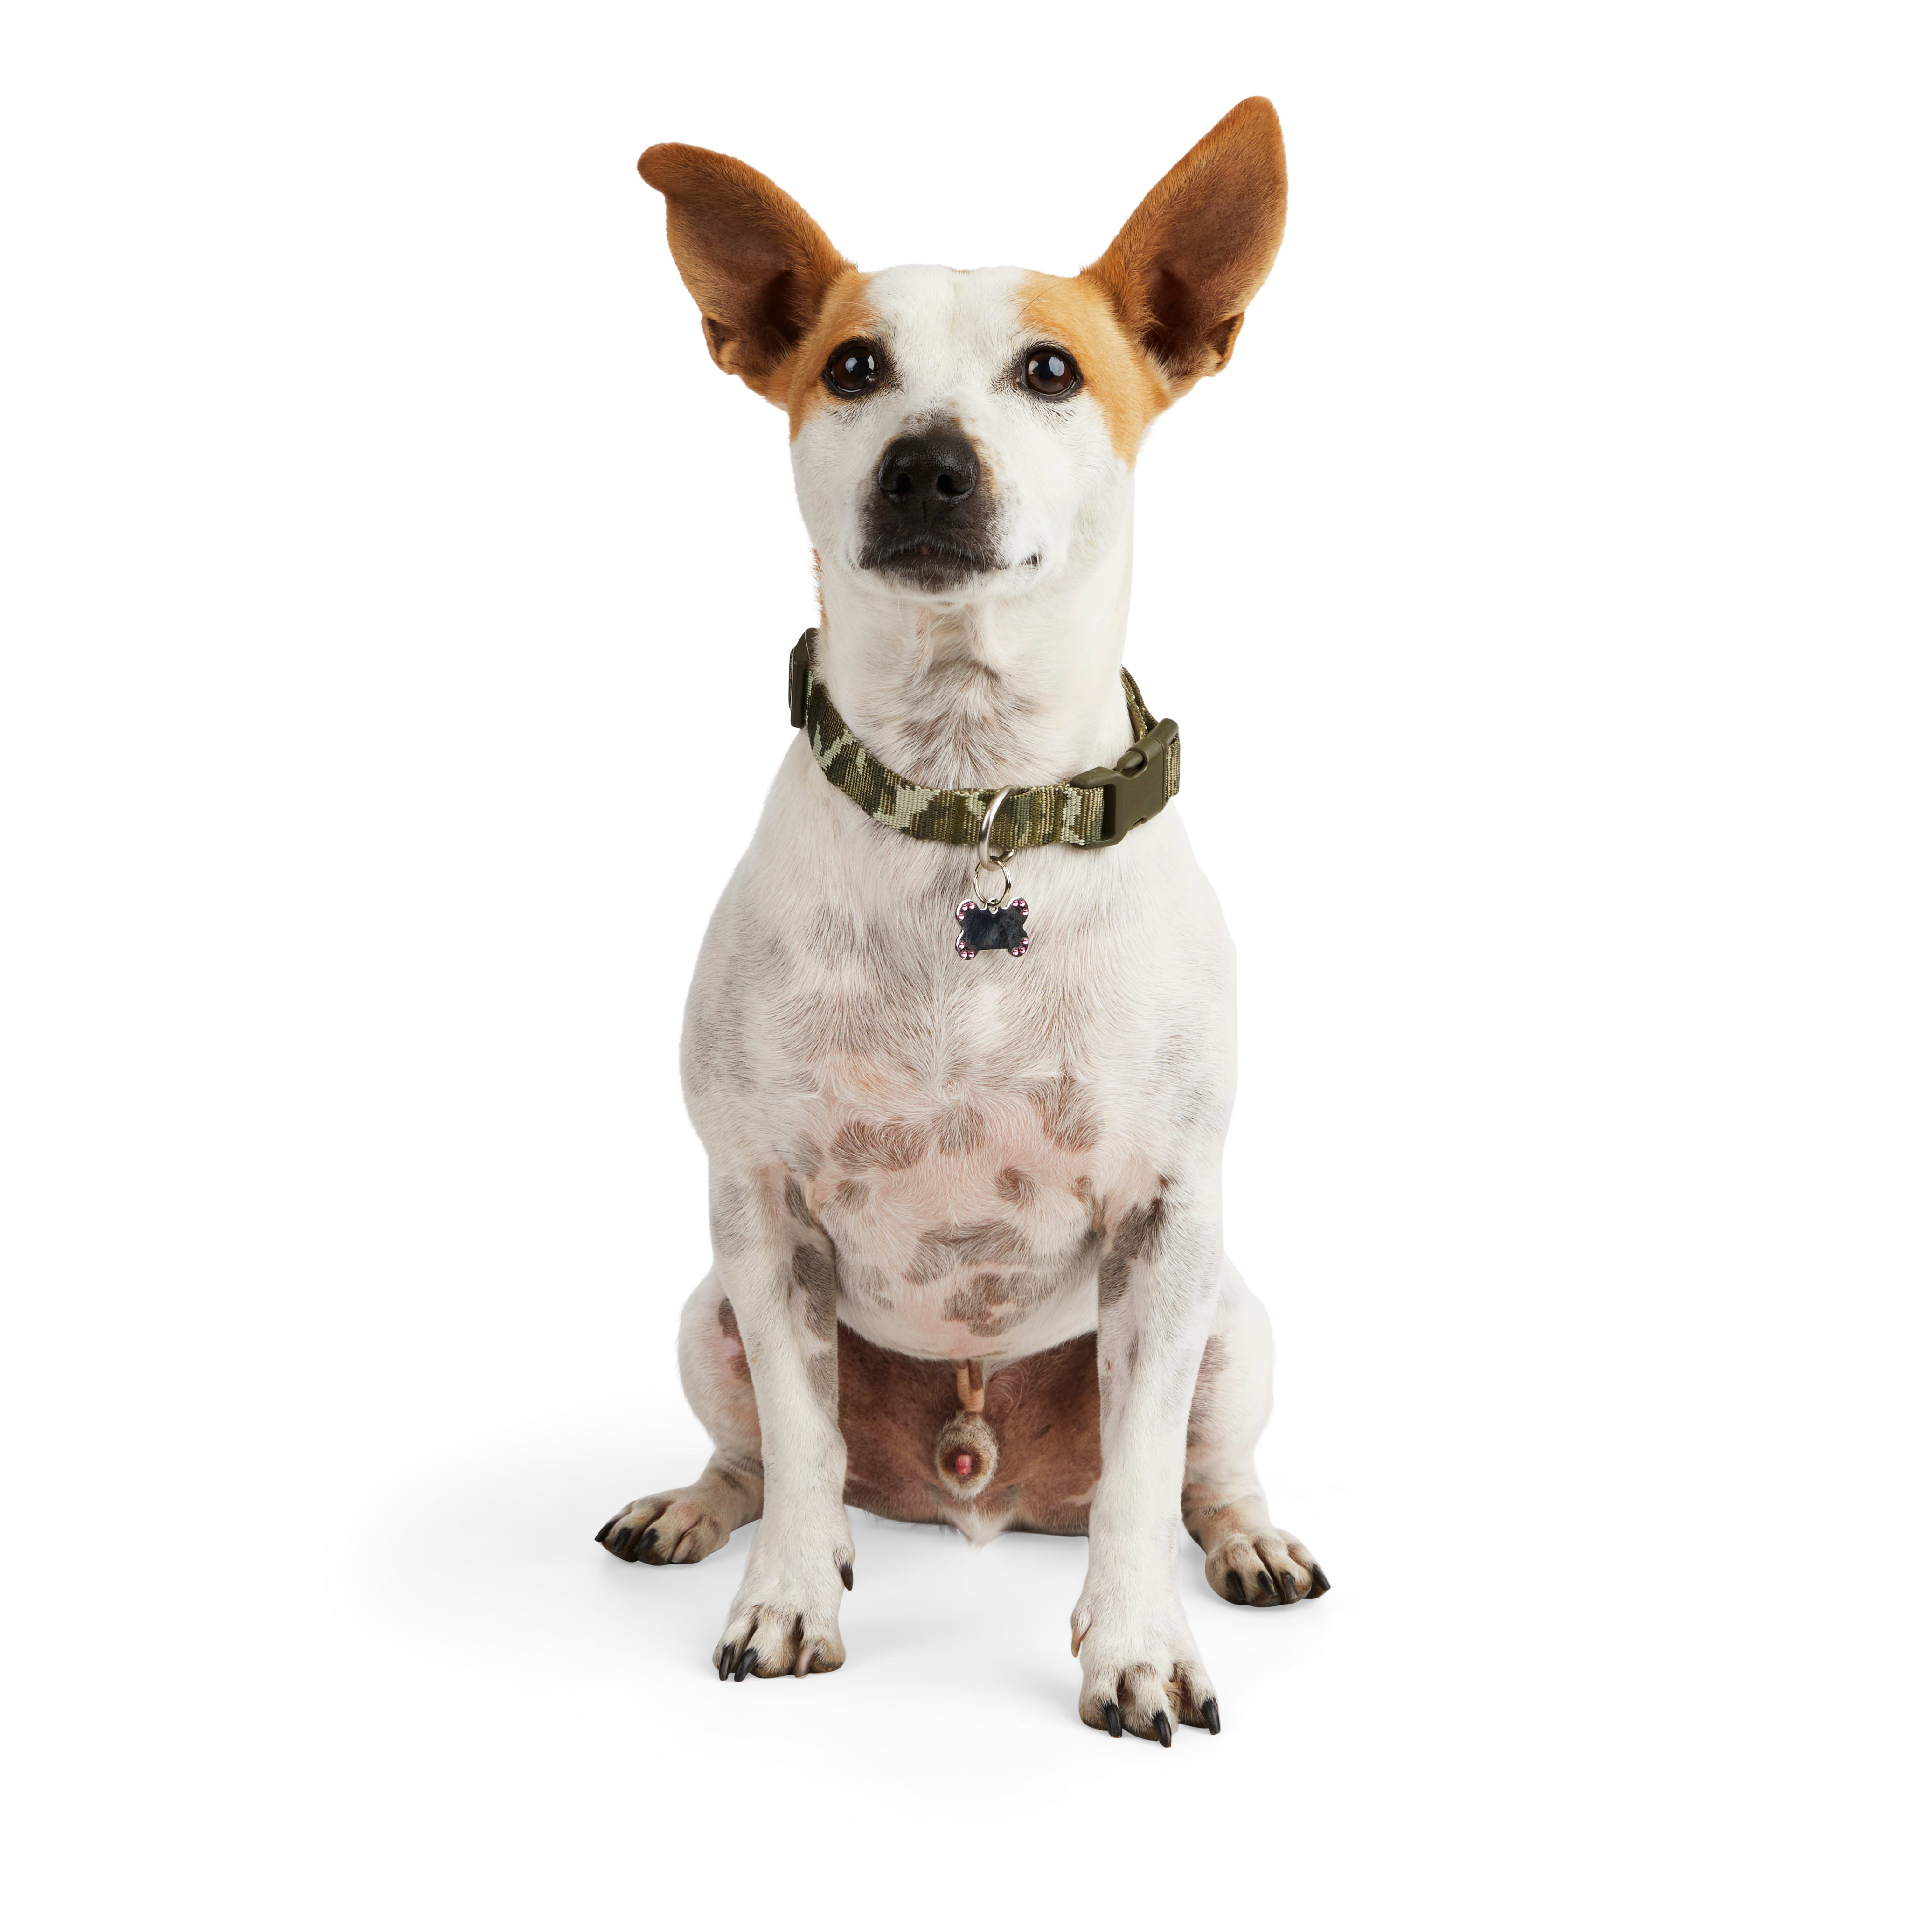 Collar Dog Personal Leash Set, Lv Dog Collar Leash